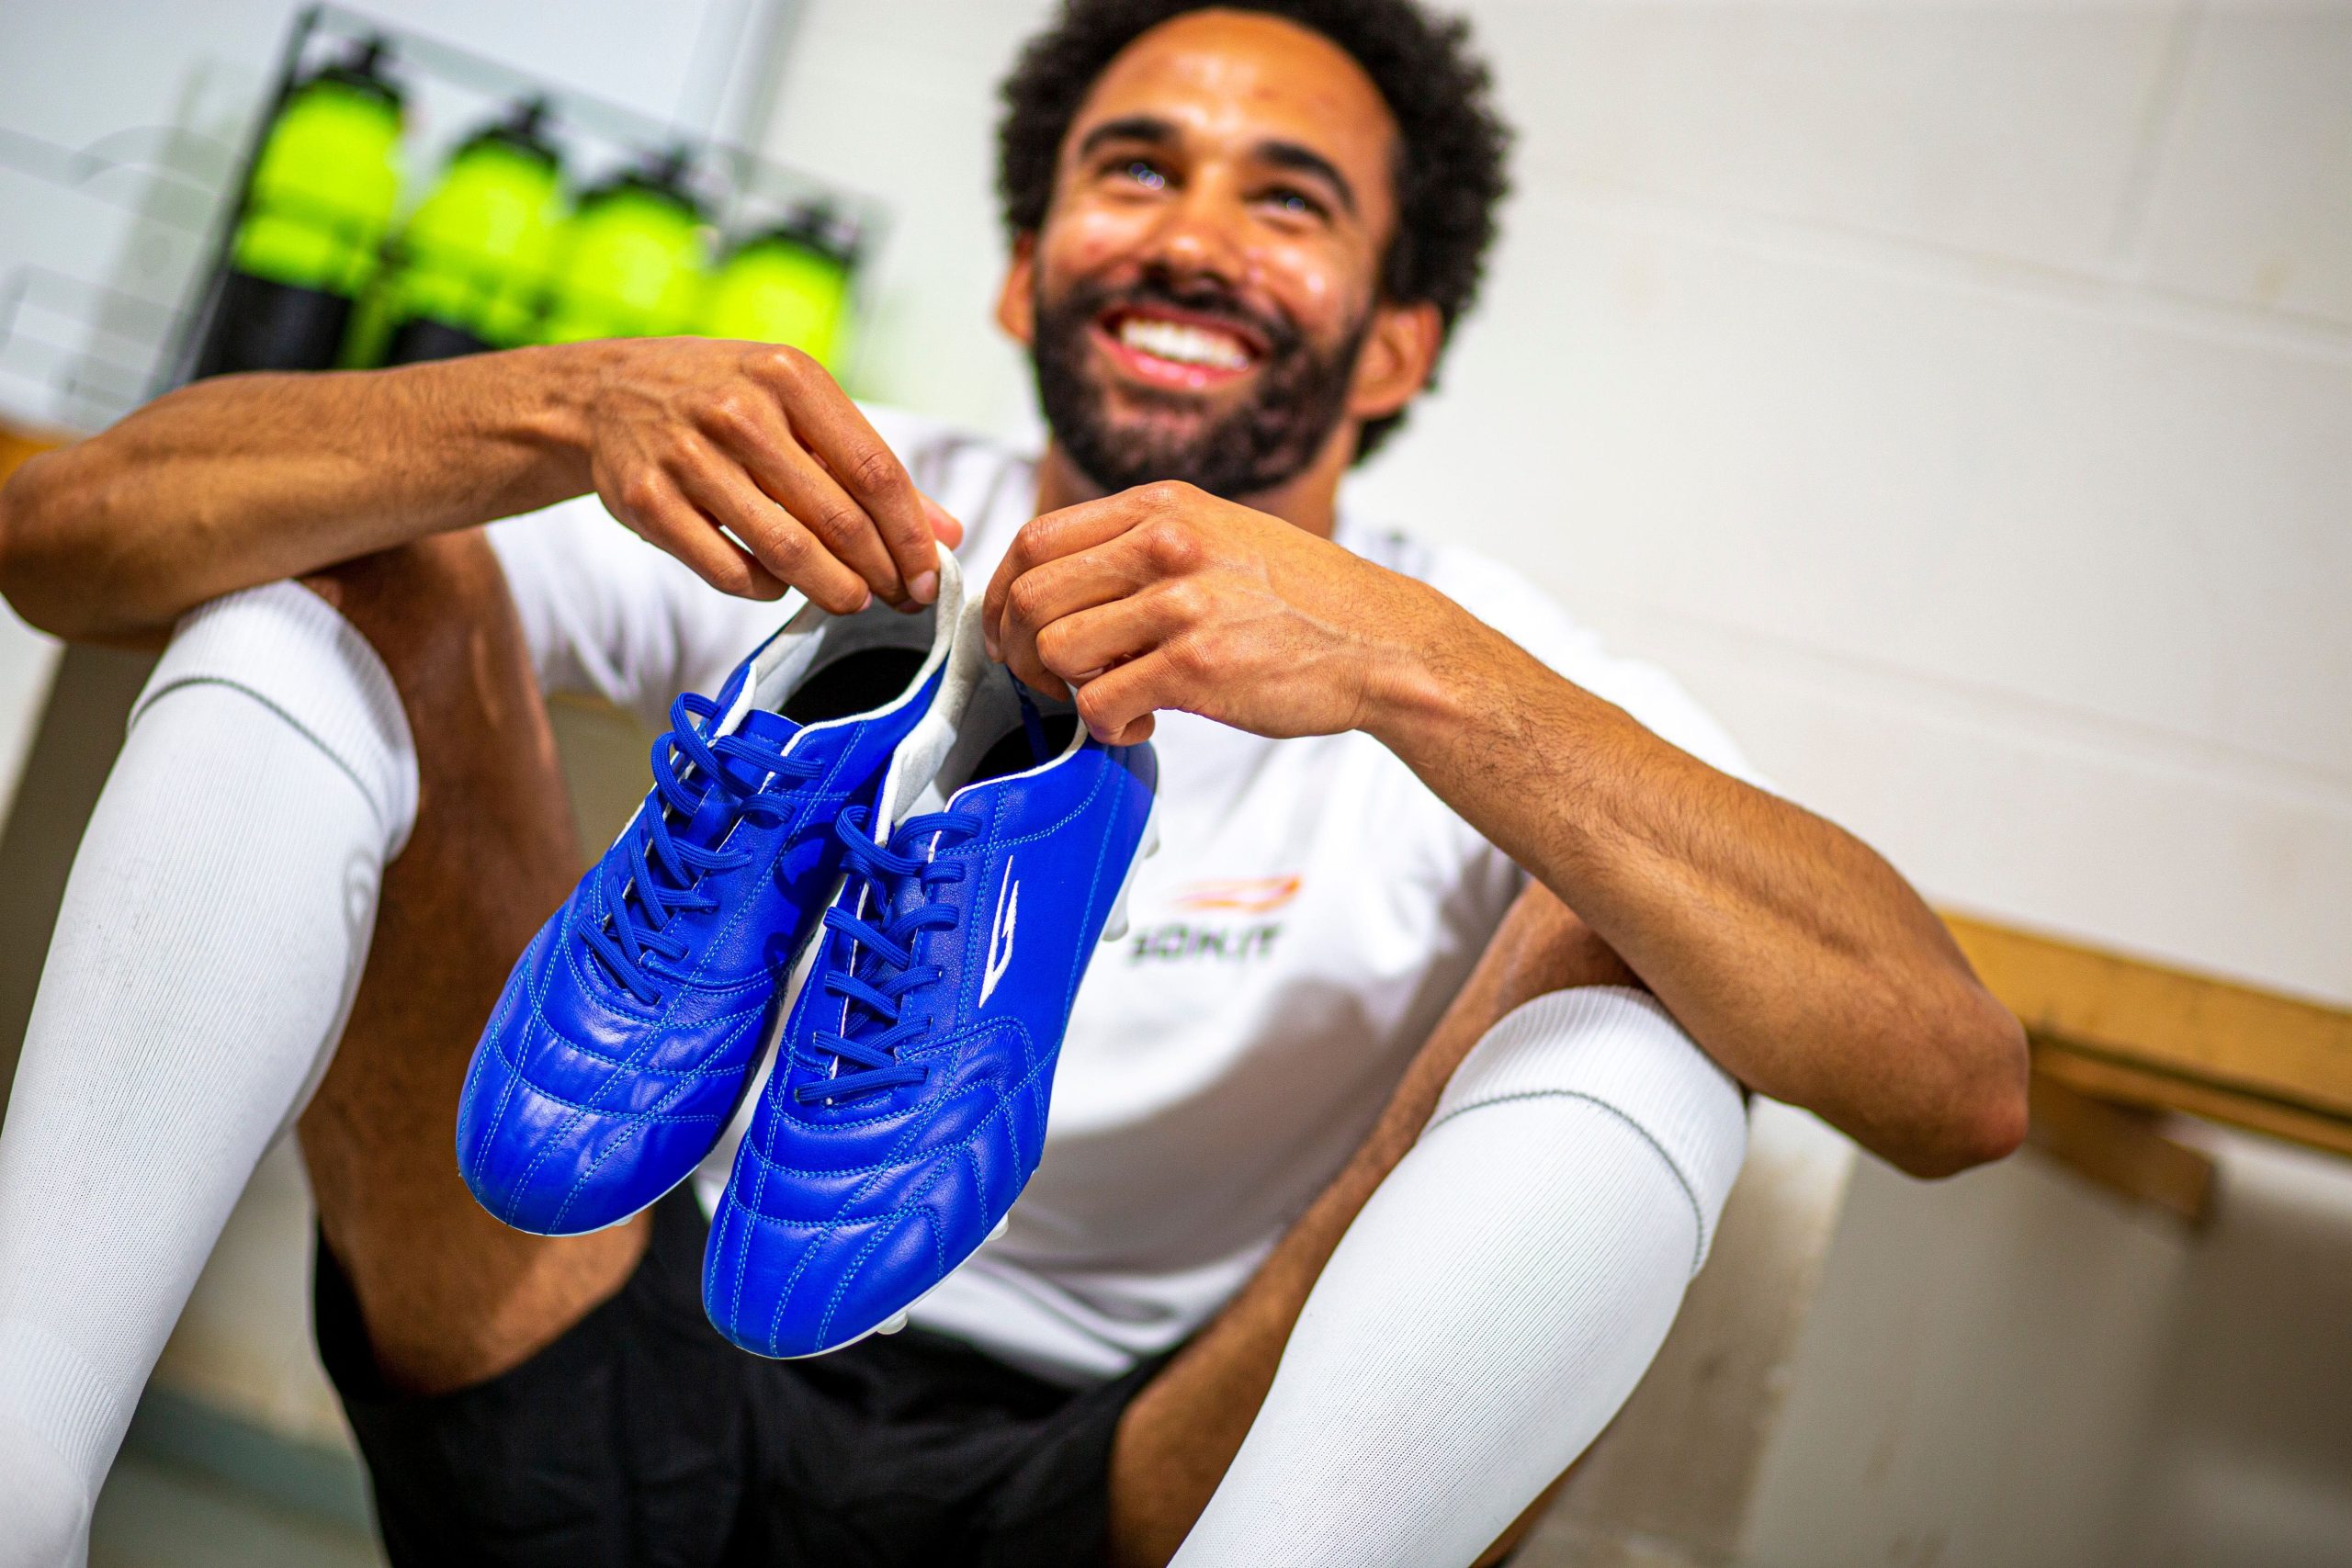 Player holding sokito sustainable Devista football boots